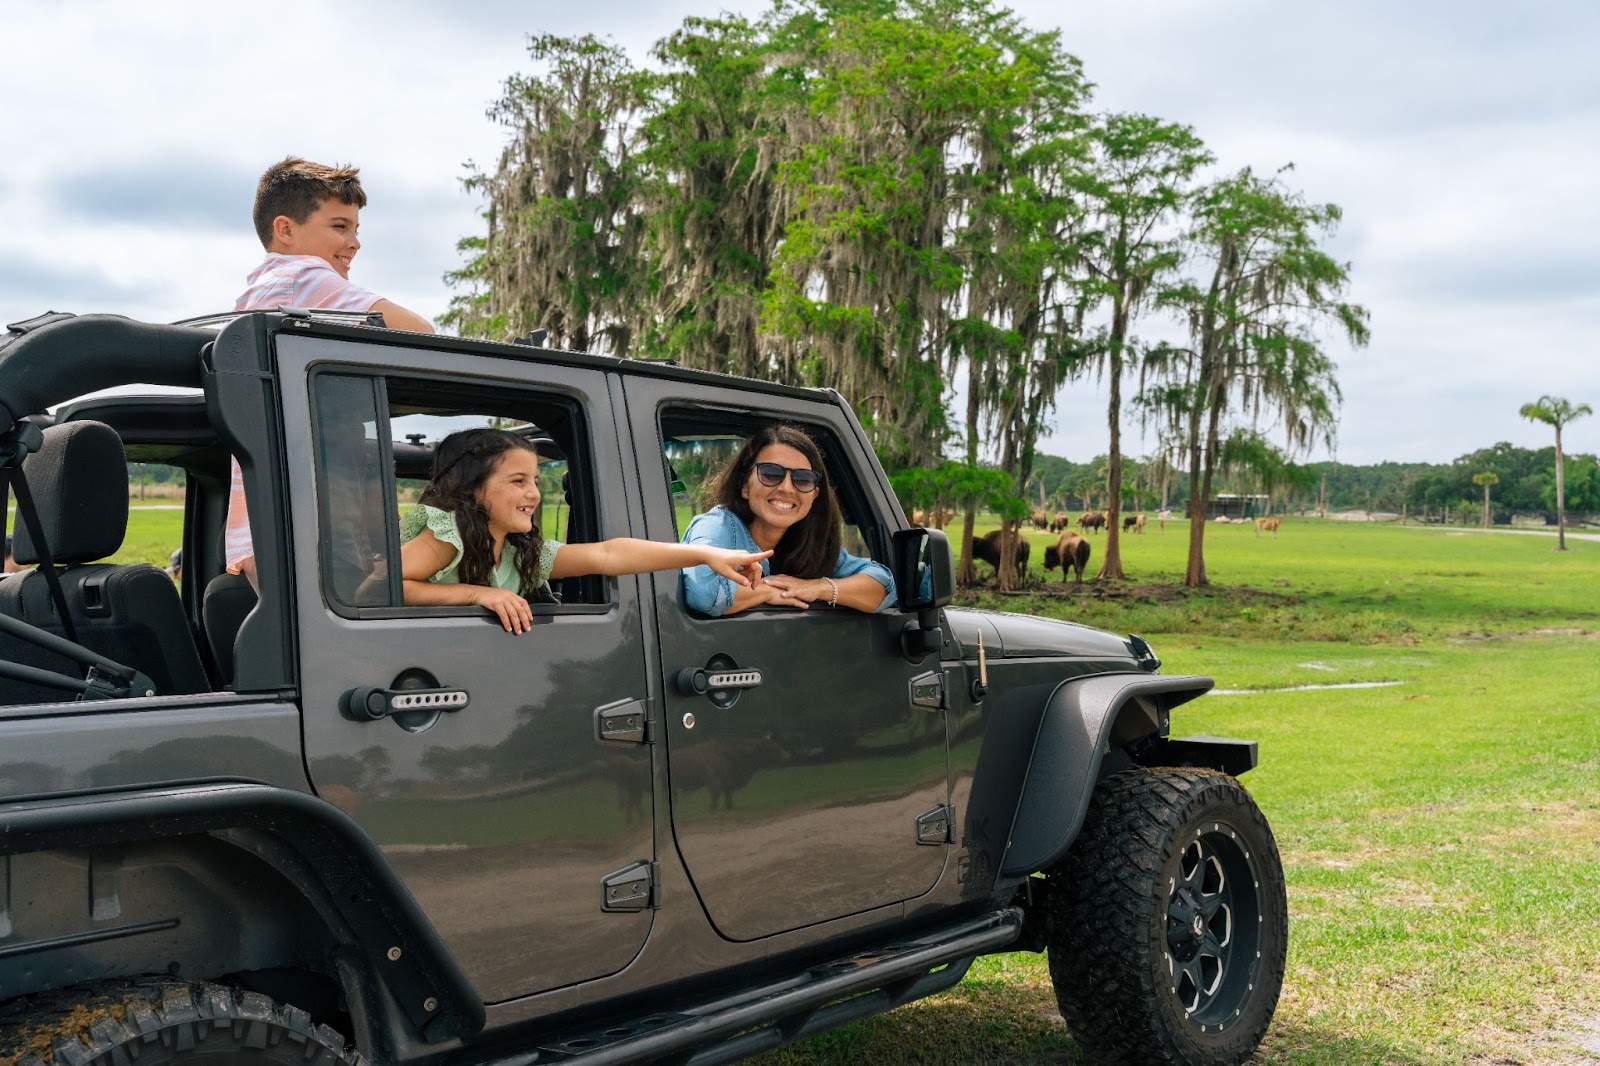 A family enjoys the drive-thru safari park on a sunny day at Wild Florida